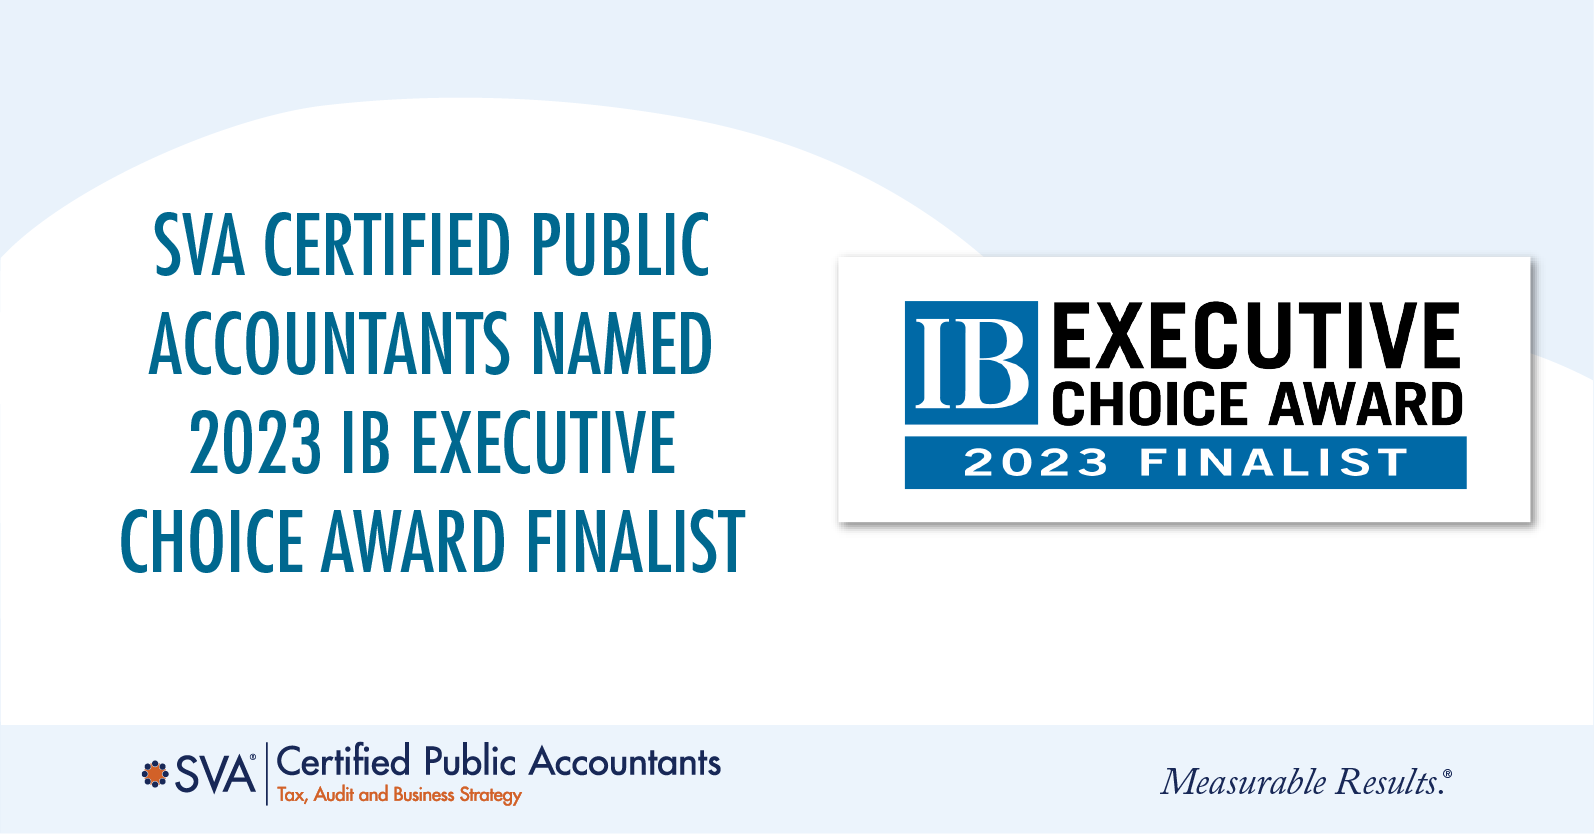 SVA Certified Public Accountants Named 2023 IB Executive Choice Award Finalist  